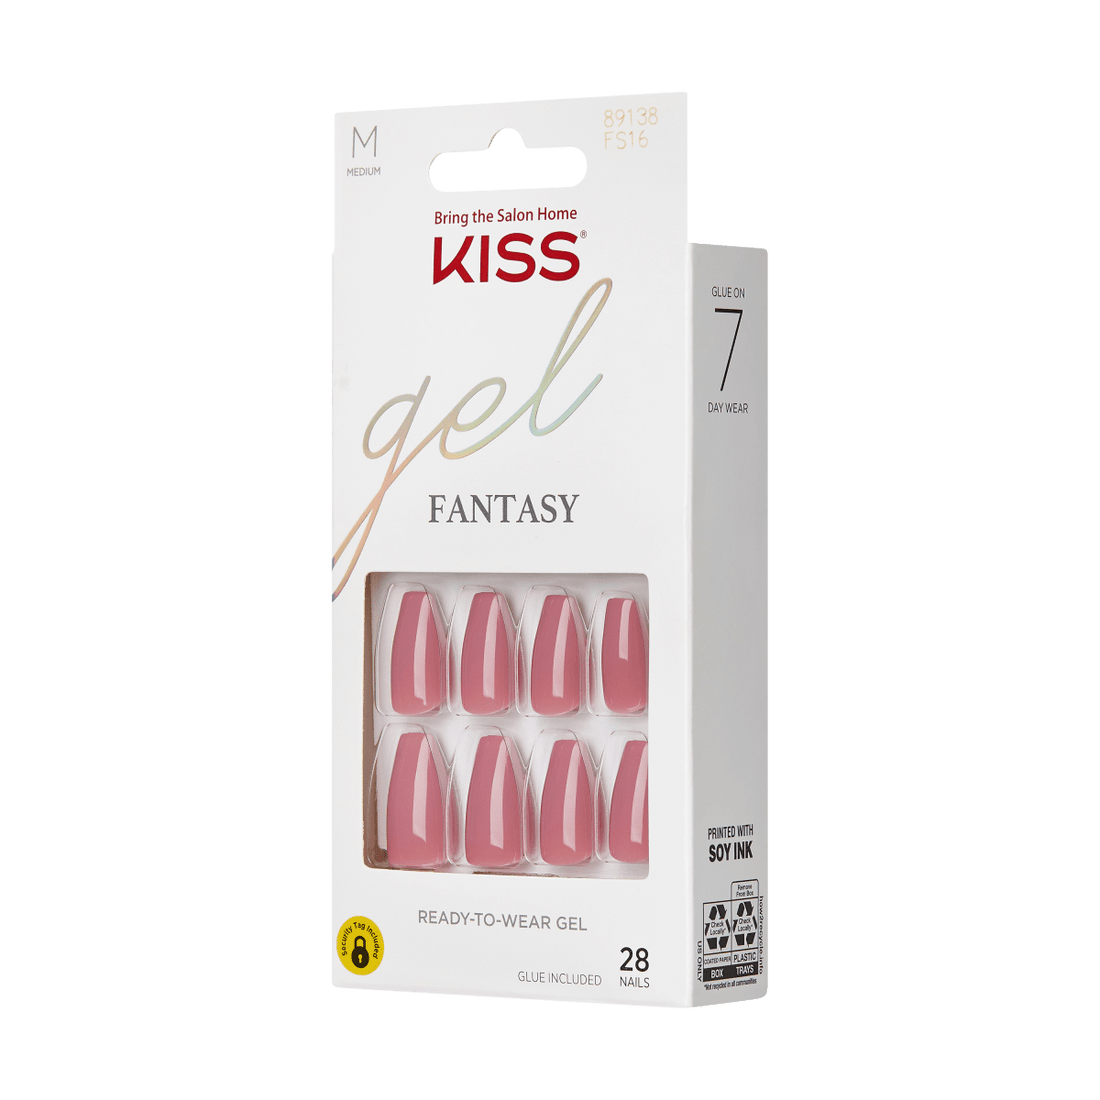 KISS Gel Fantasy Sculpted Nails - Letter To Ur EX